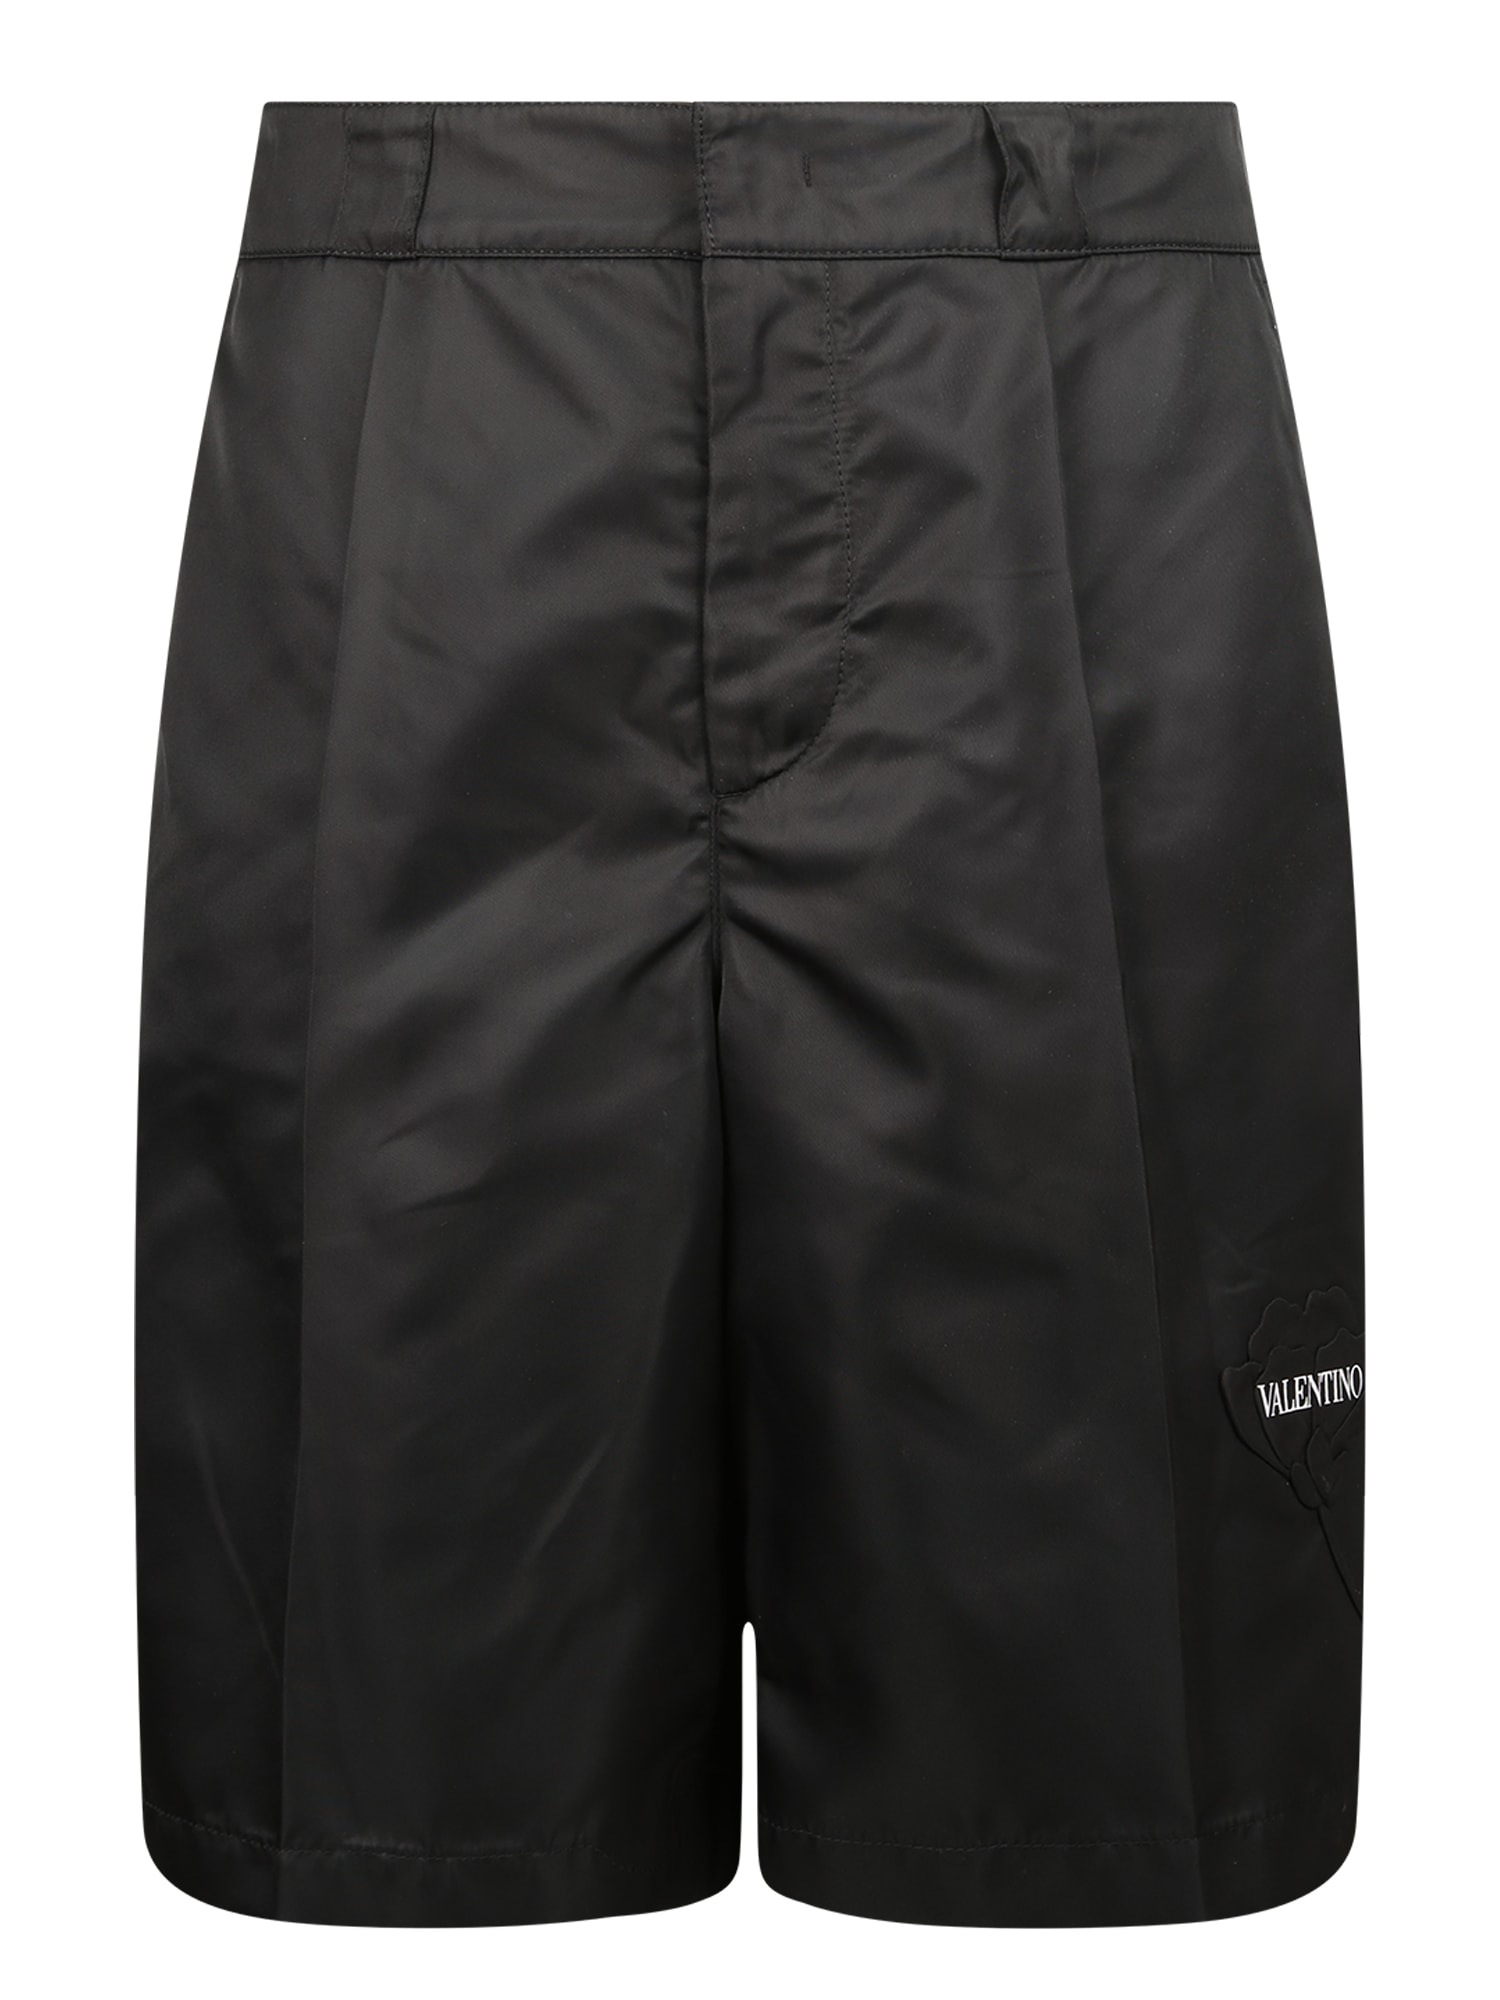 Valentino Branded Bermuda Shorts